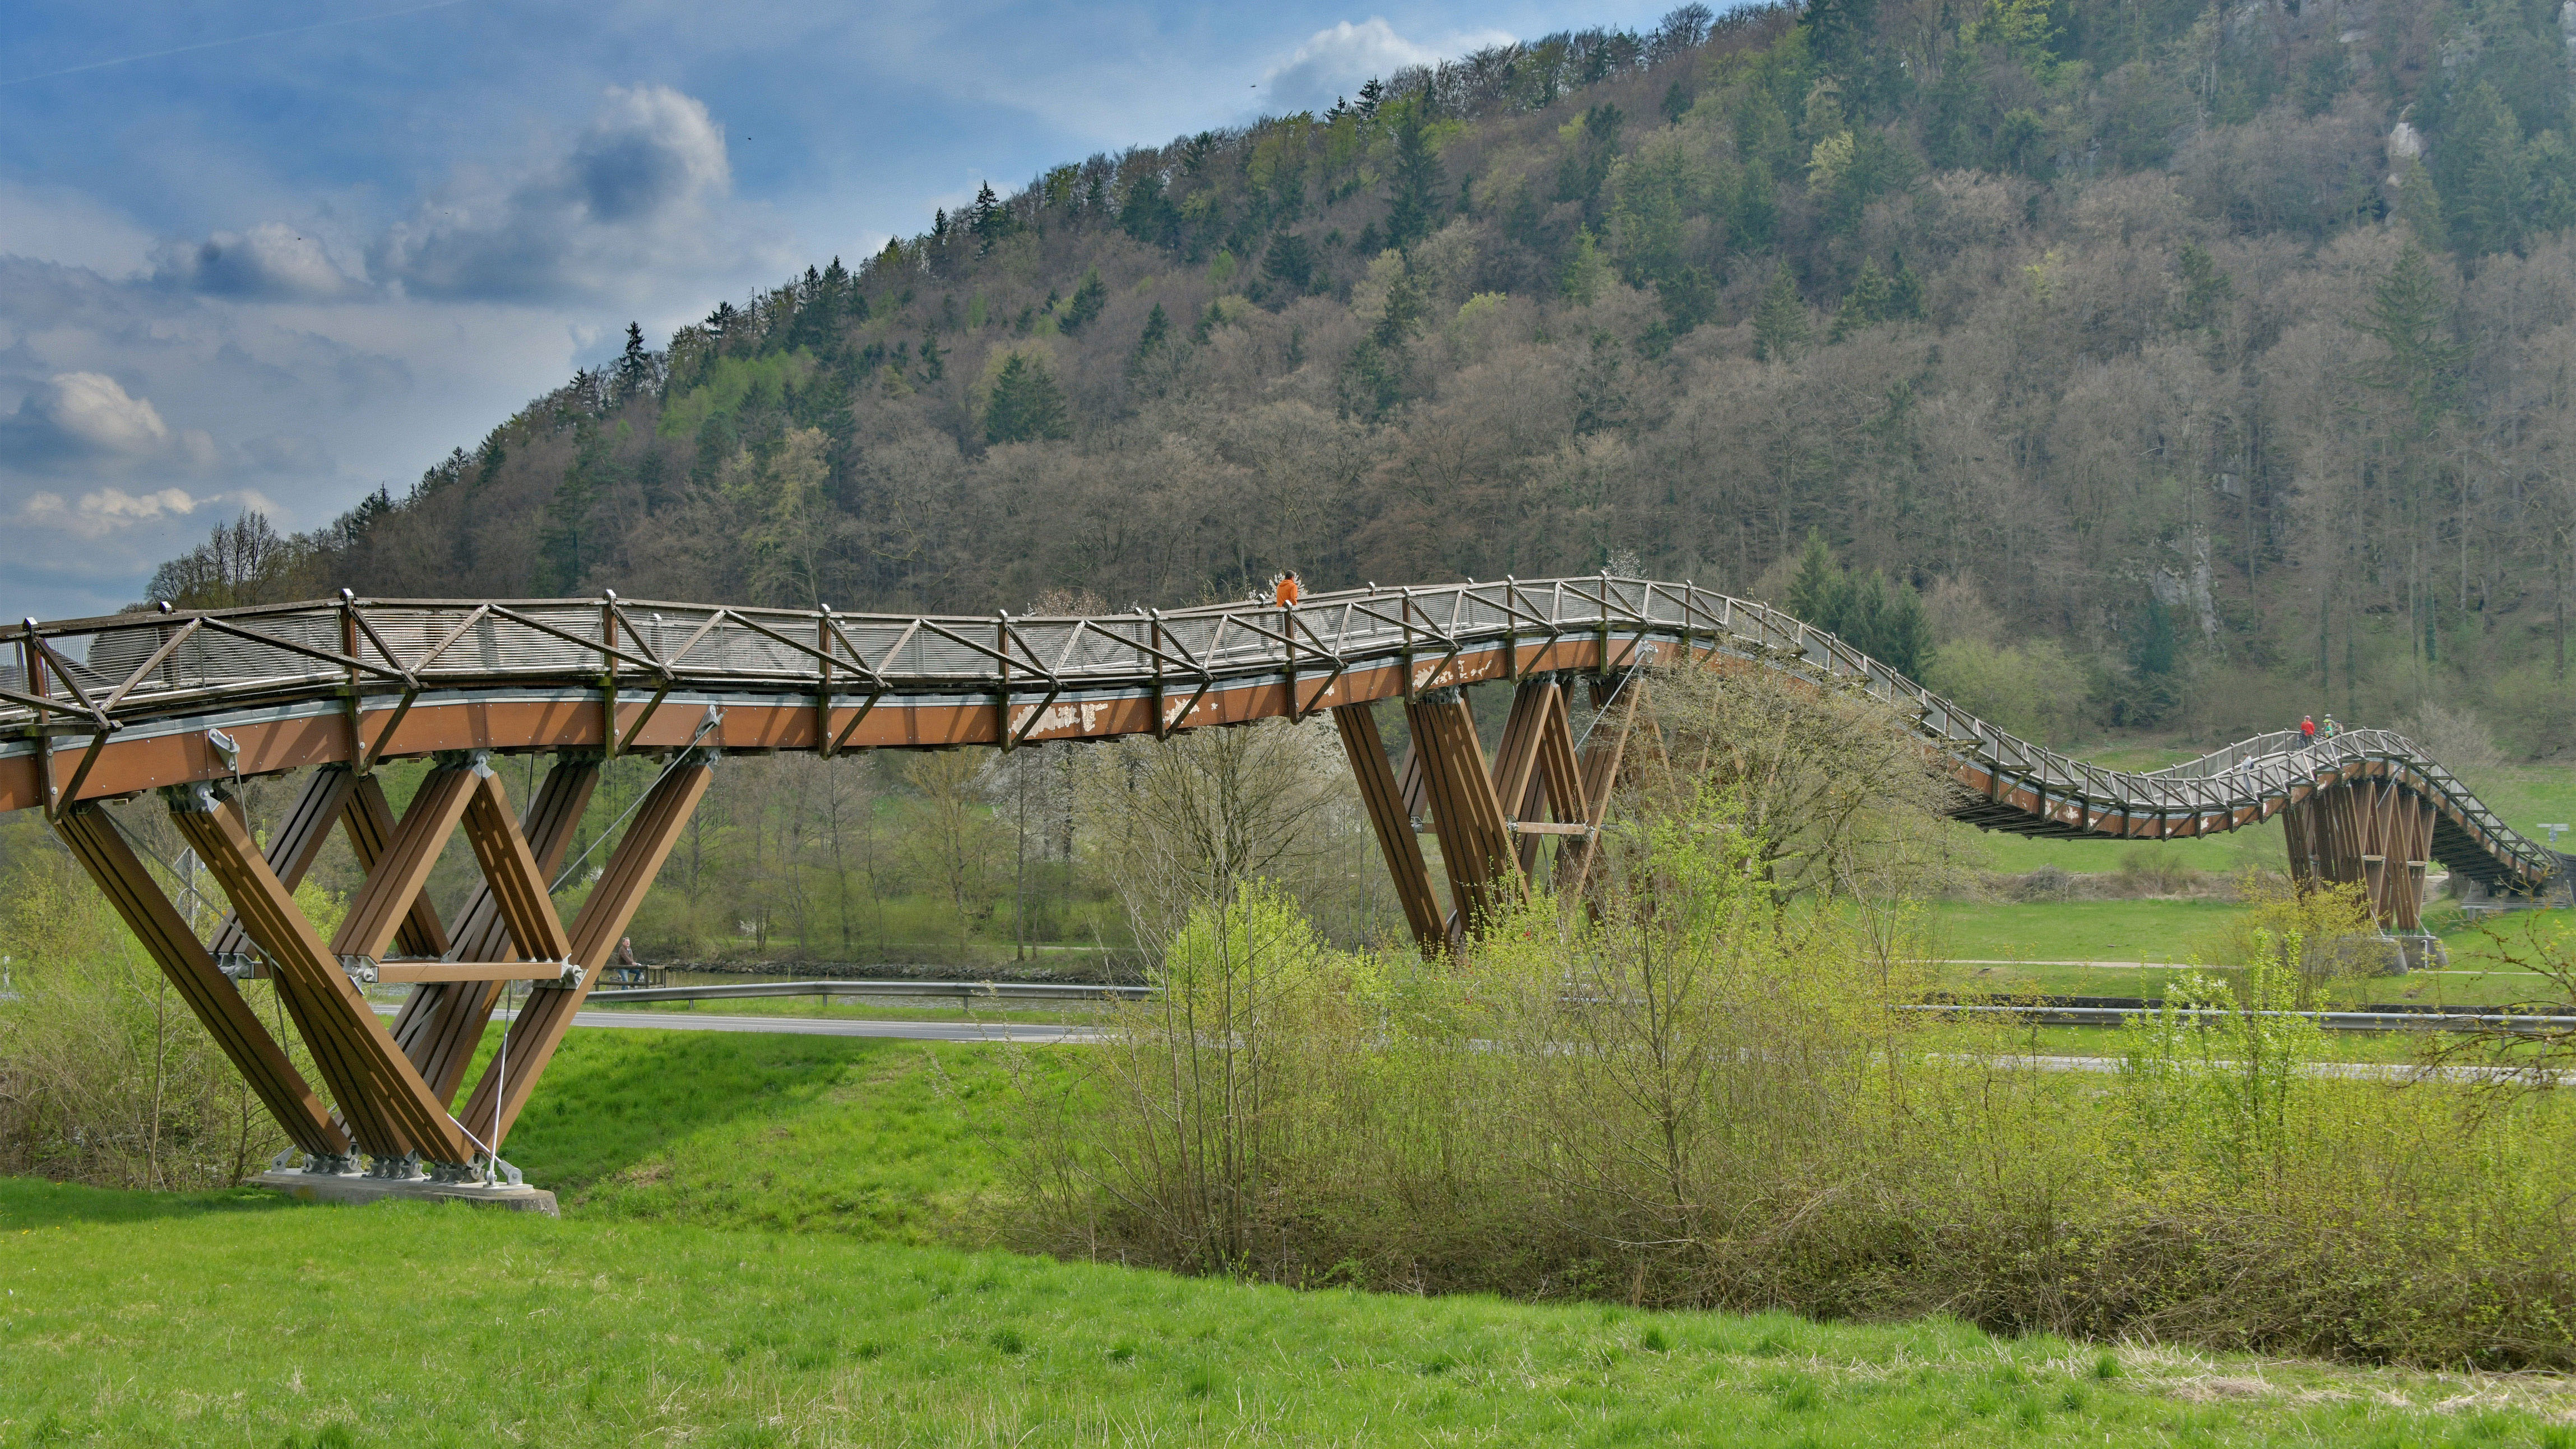 Wooden bridge "Tatzlwurm" – Essing – Germany by Rüdiger Hess